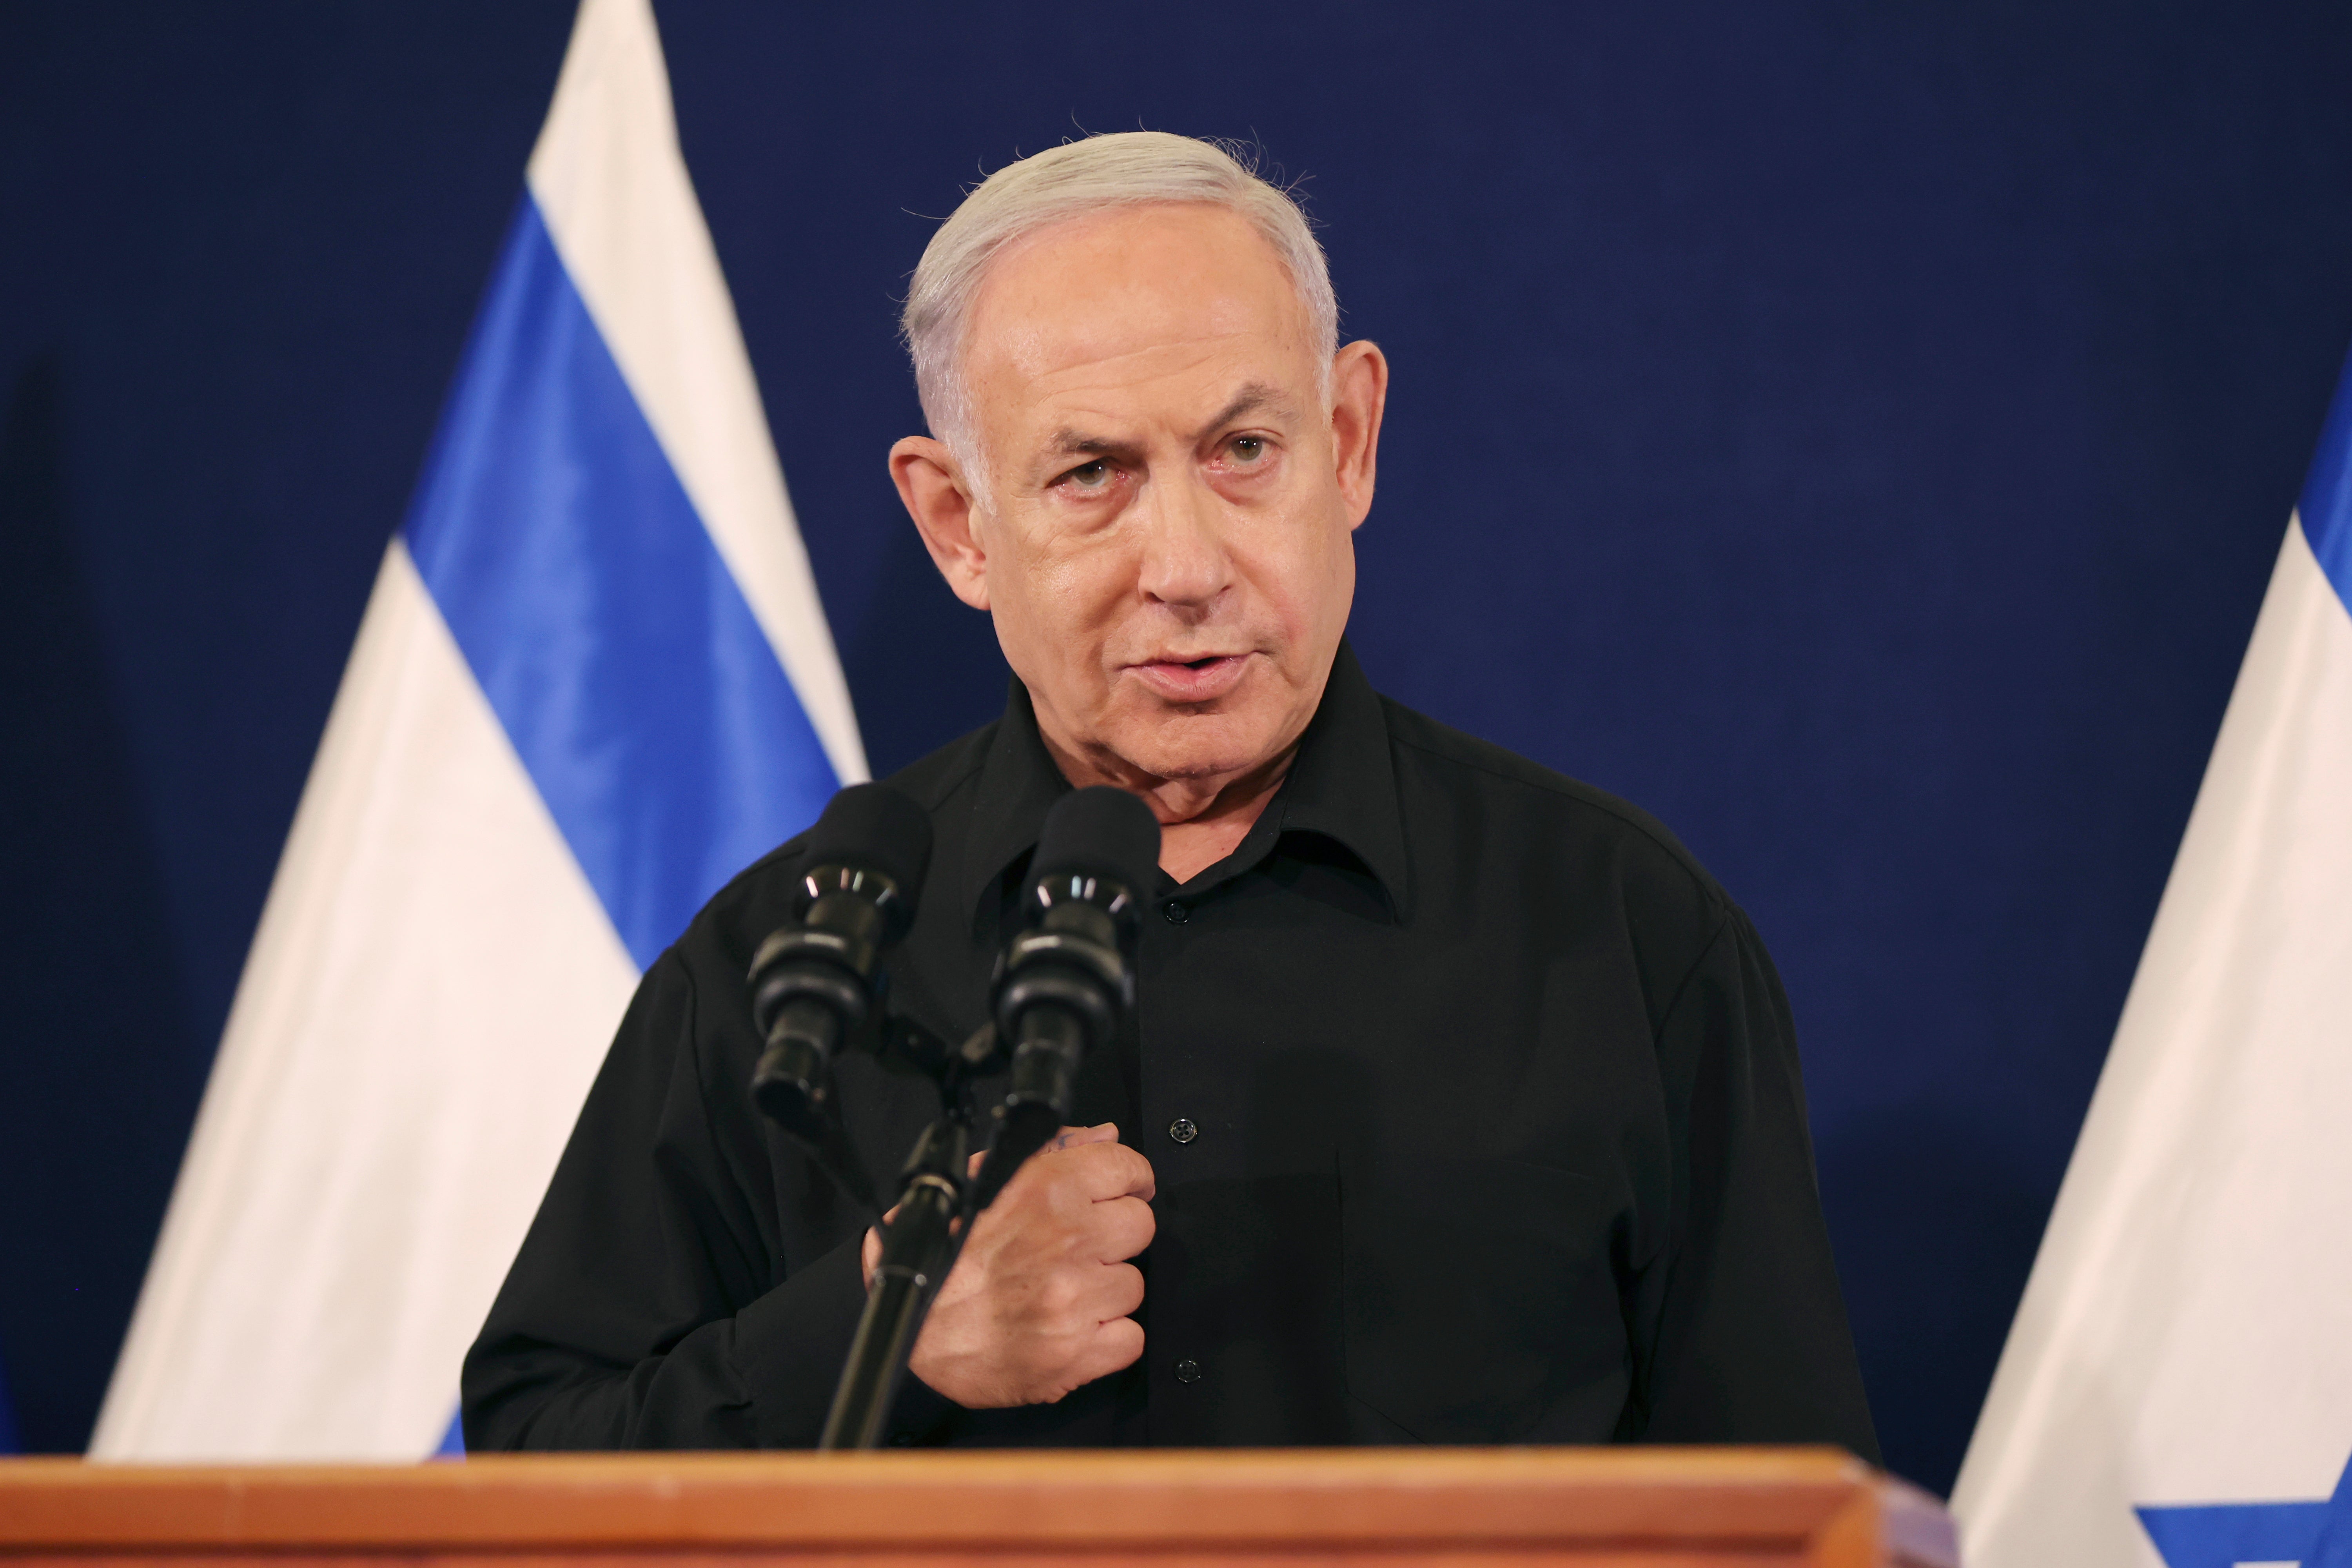 Terrorism is a hydra, and Benjamin Netanyahu’s Israel still lacks an exit strategy